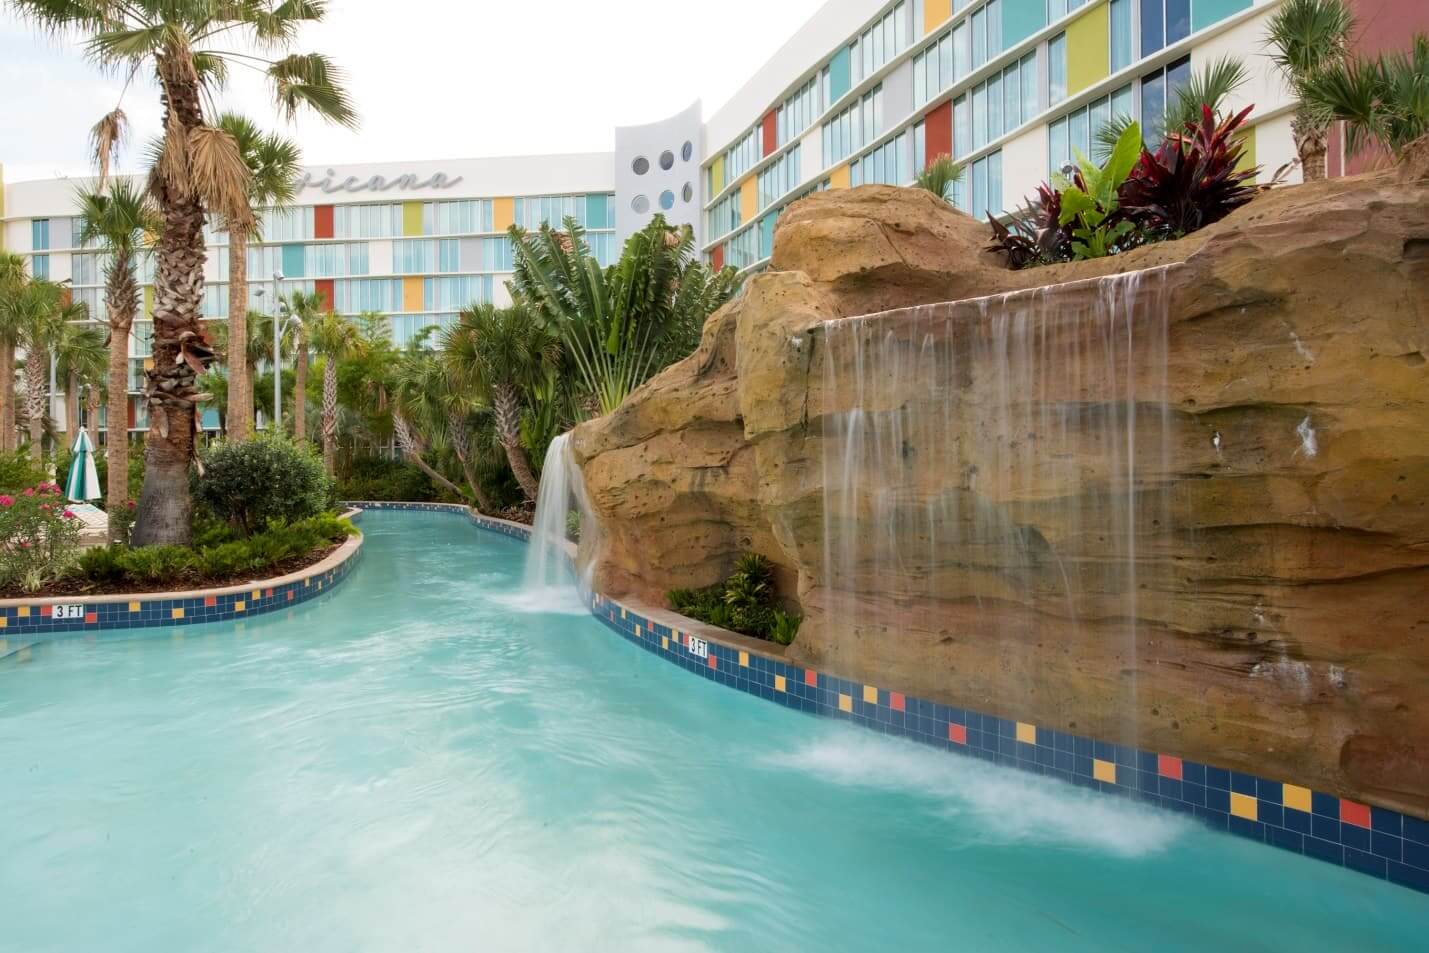 Piscina no hotel Cabana Bay Beach Resort da Universal Orlando